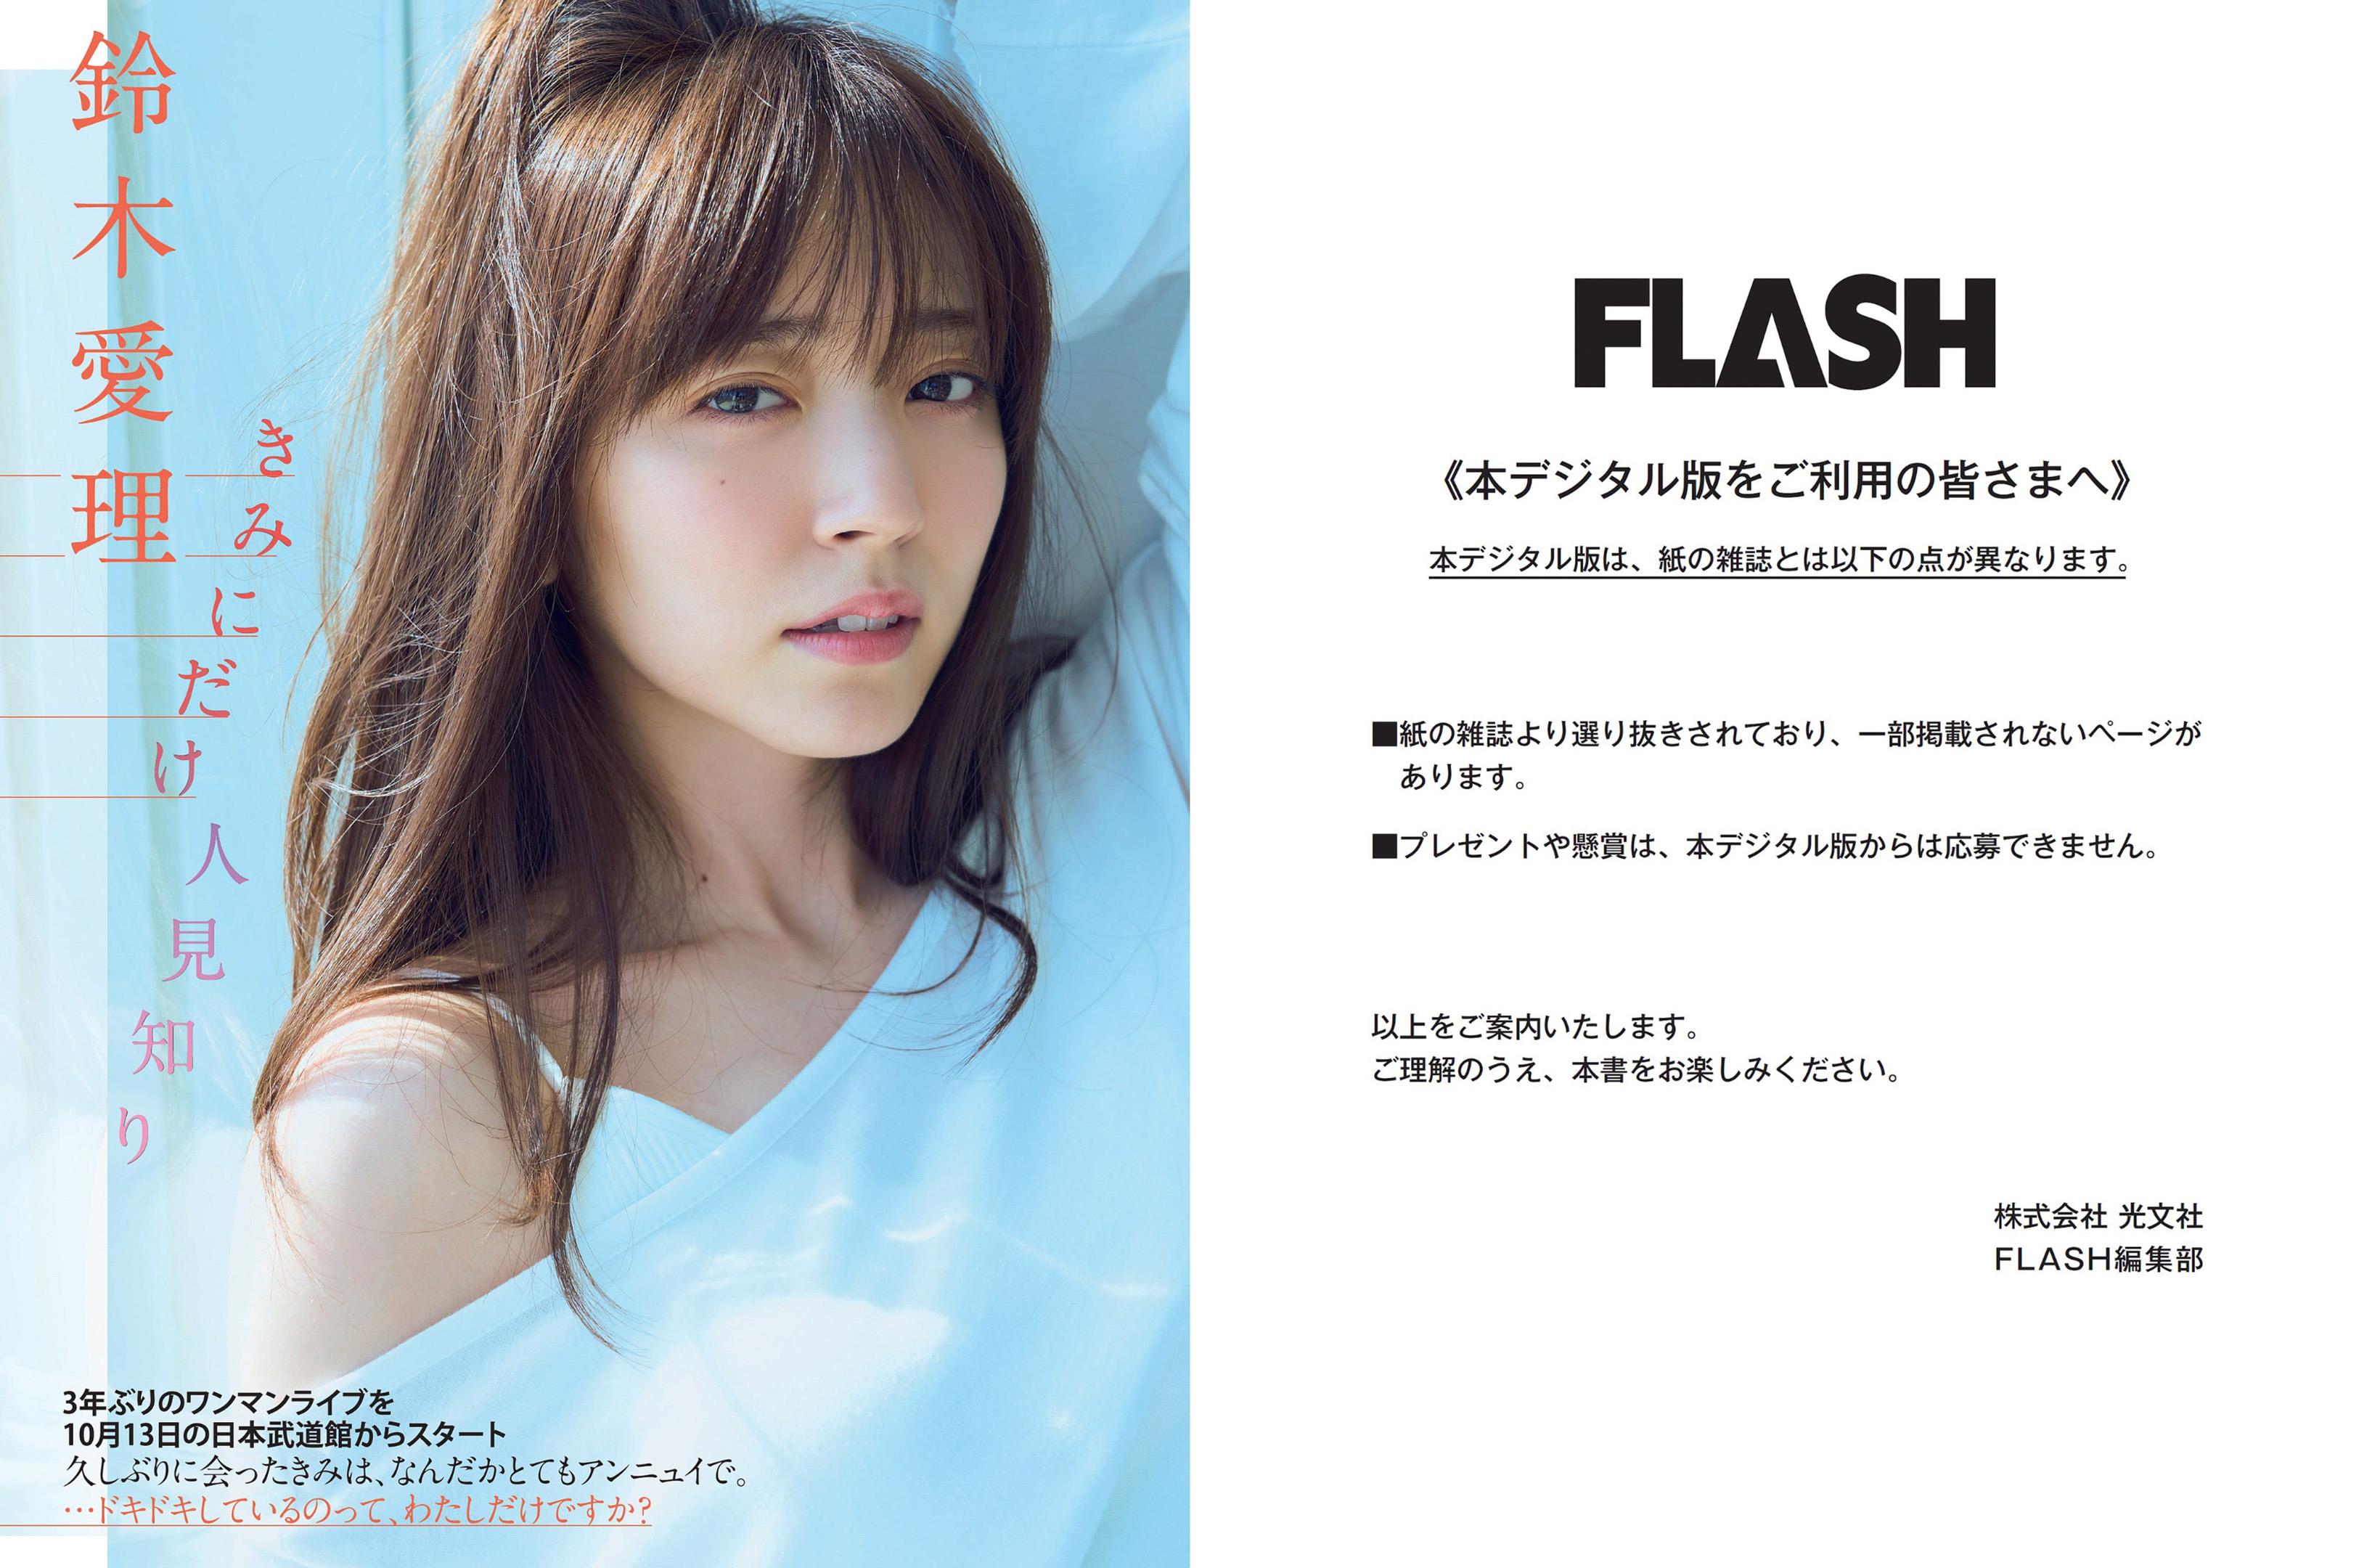 FLASH 2021.10.19 鈴木愛理 - 12.jpg